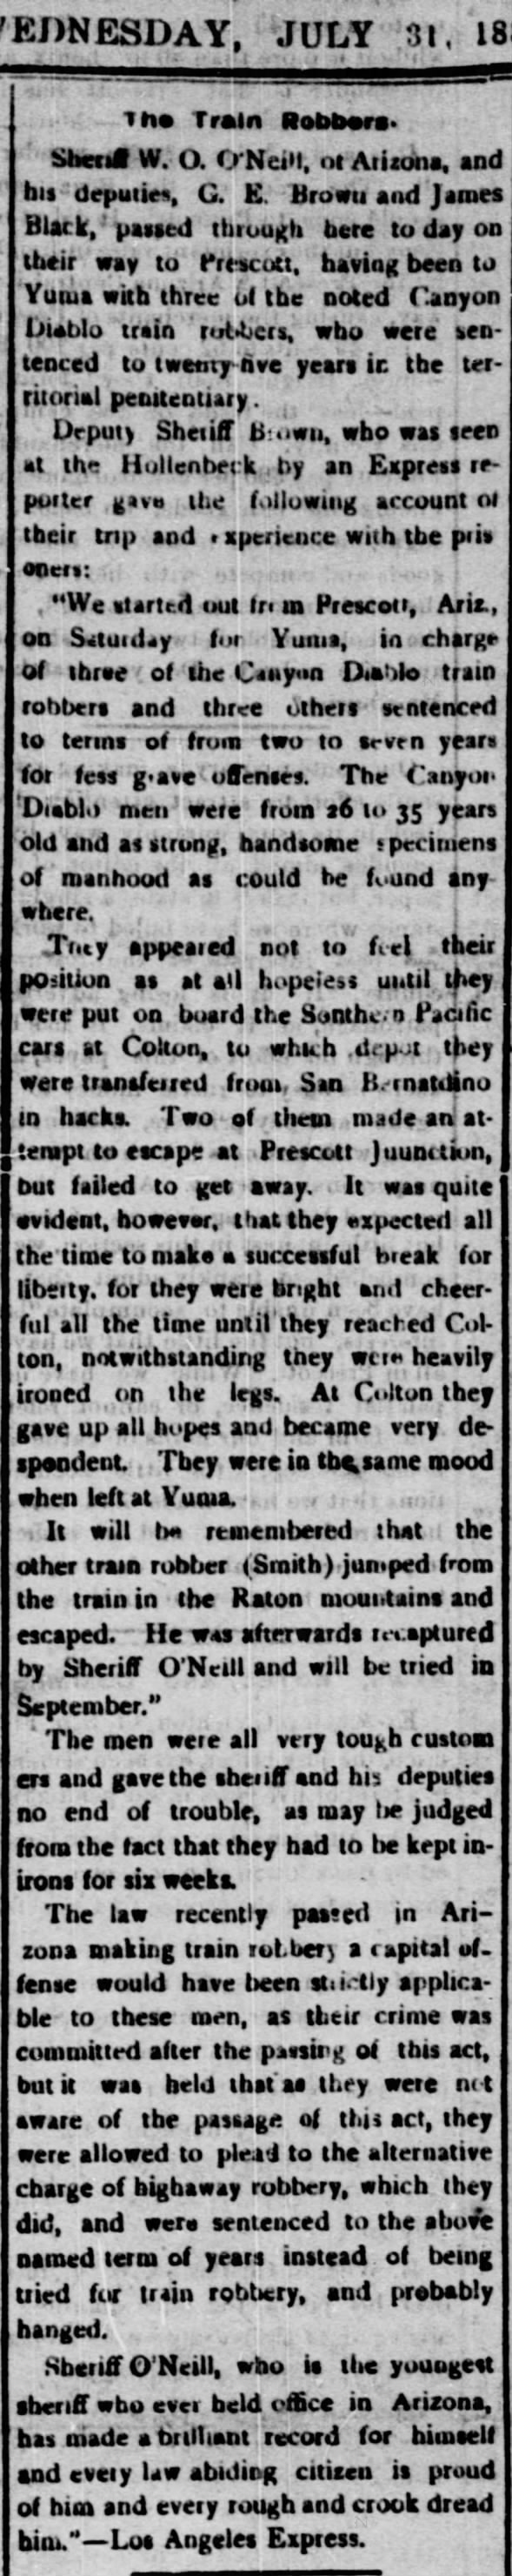 Account of taking prisoners to Yuma.